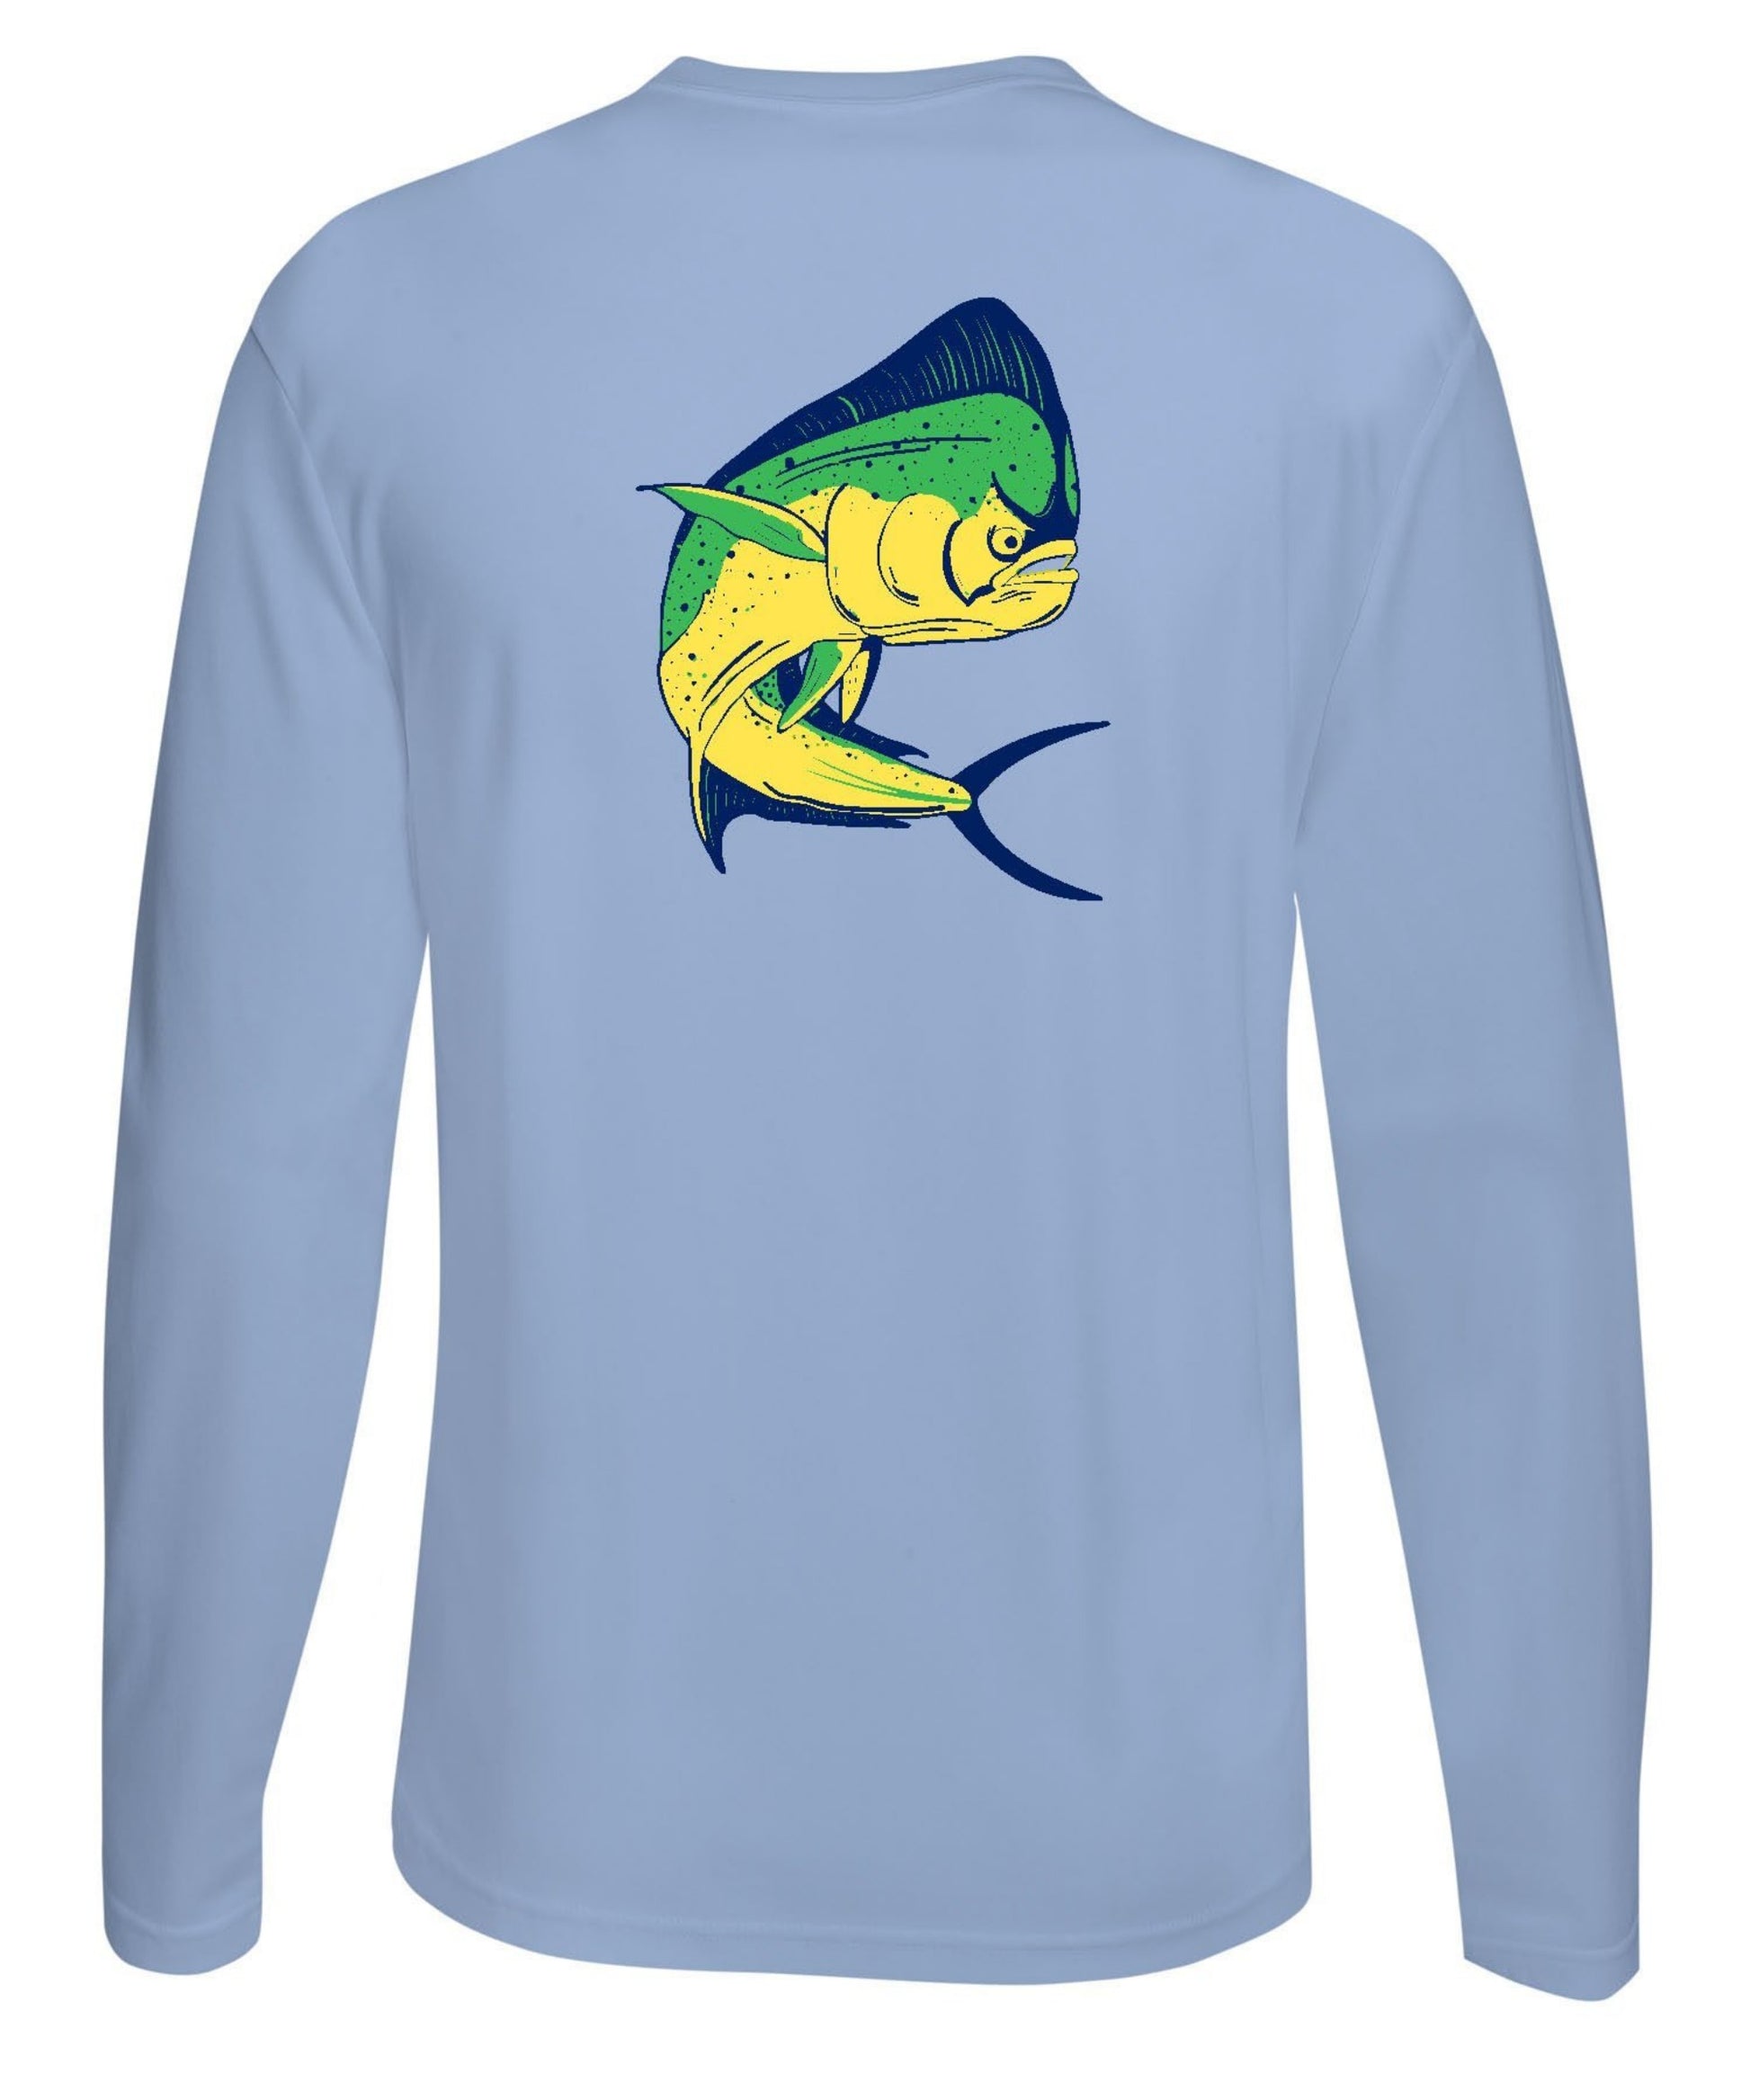 Mahi Fishing Performance Dry-Fit Long Sleeve Light Blue Shirt